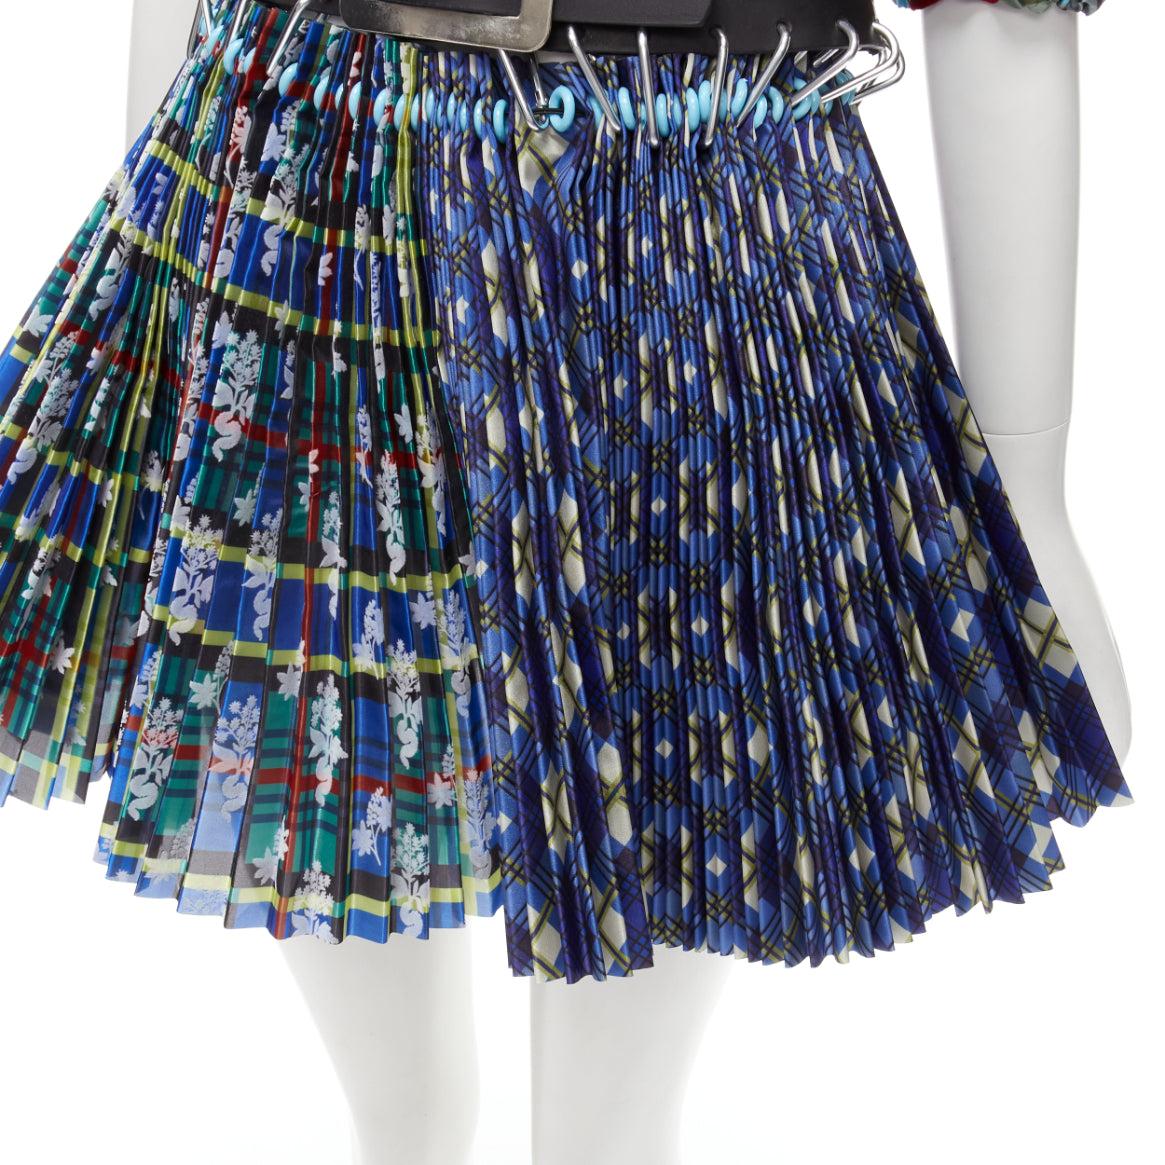 CHOPOVA LOWENA Punk blue plaid floral damask pleated eyelet skirt belted dress S 4